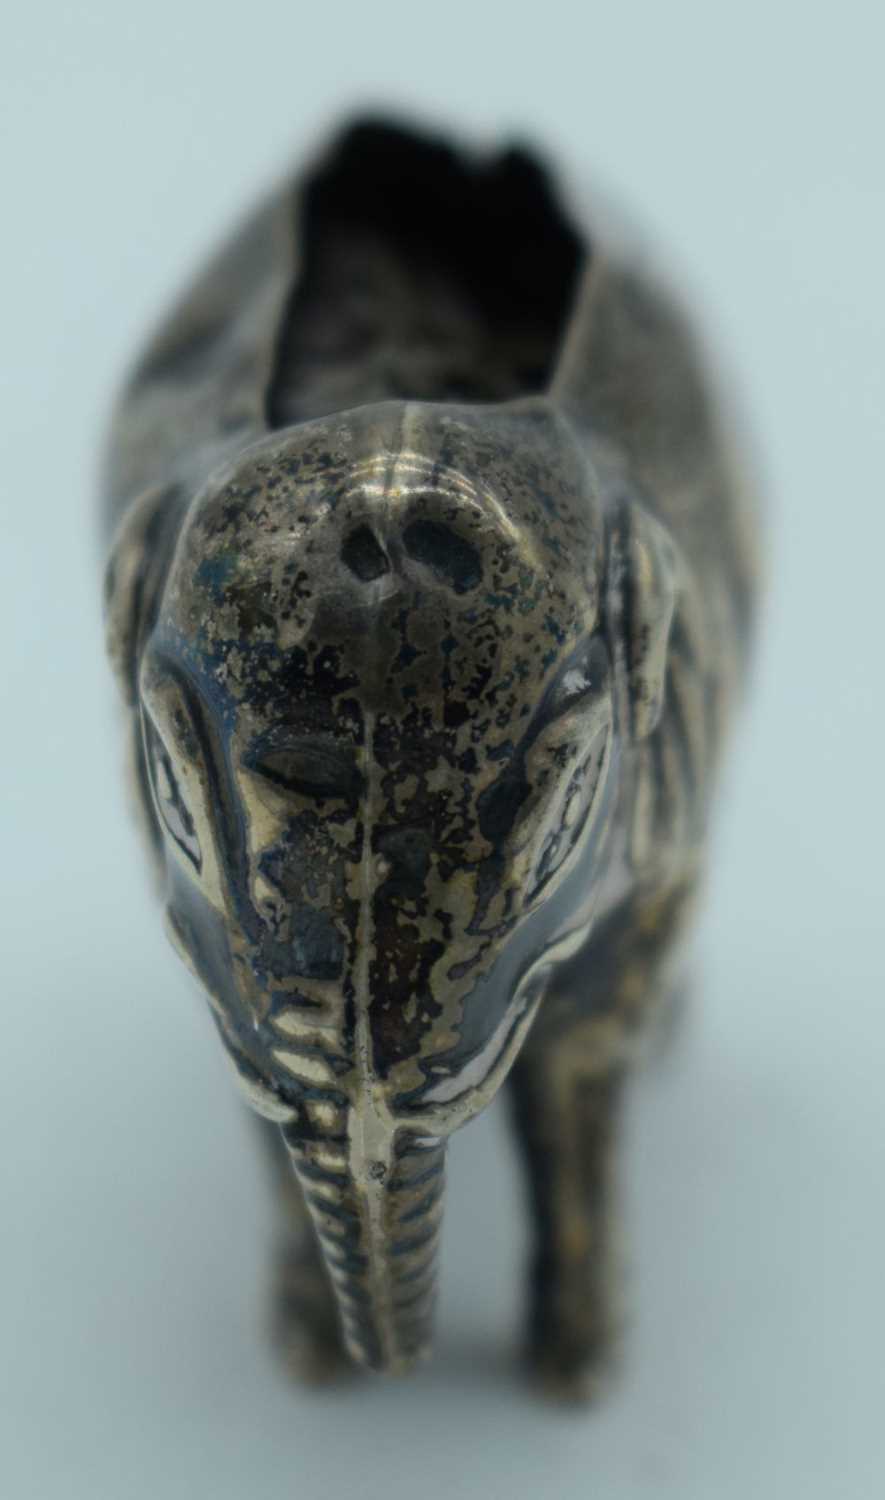 AN ANTIQUE SILVER ELEPHANT PIN CUSHION. 25 grams. 6.75 cm x 4.5 cm. - Image 2 of 4